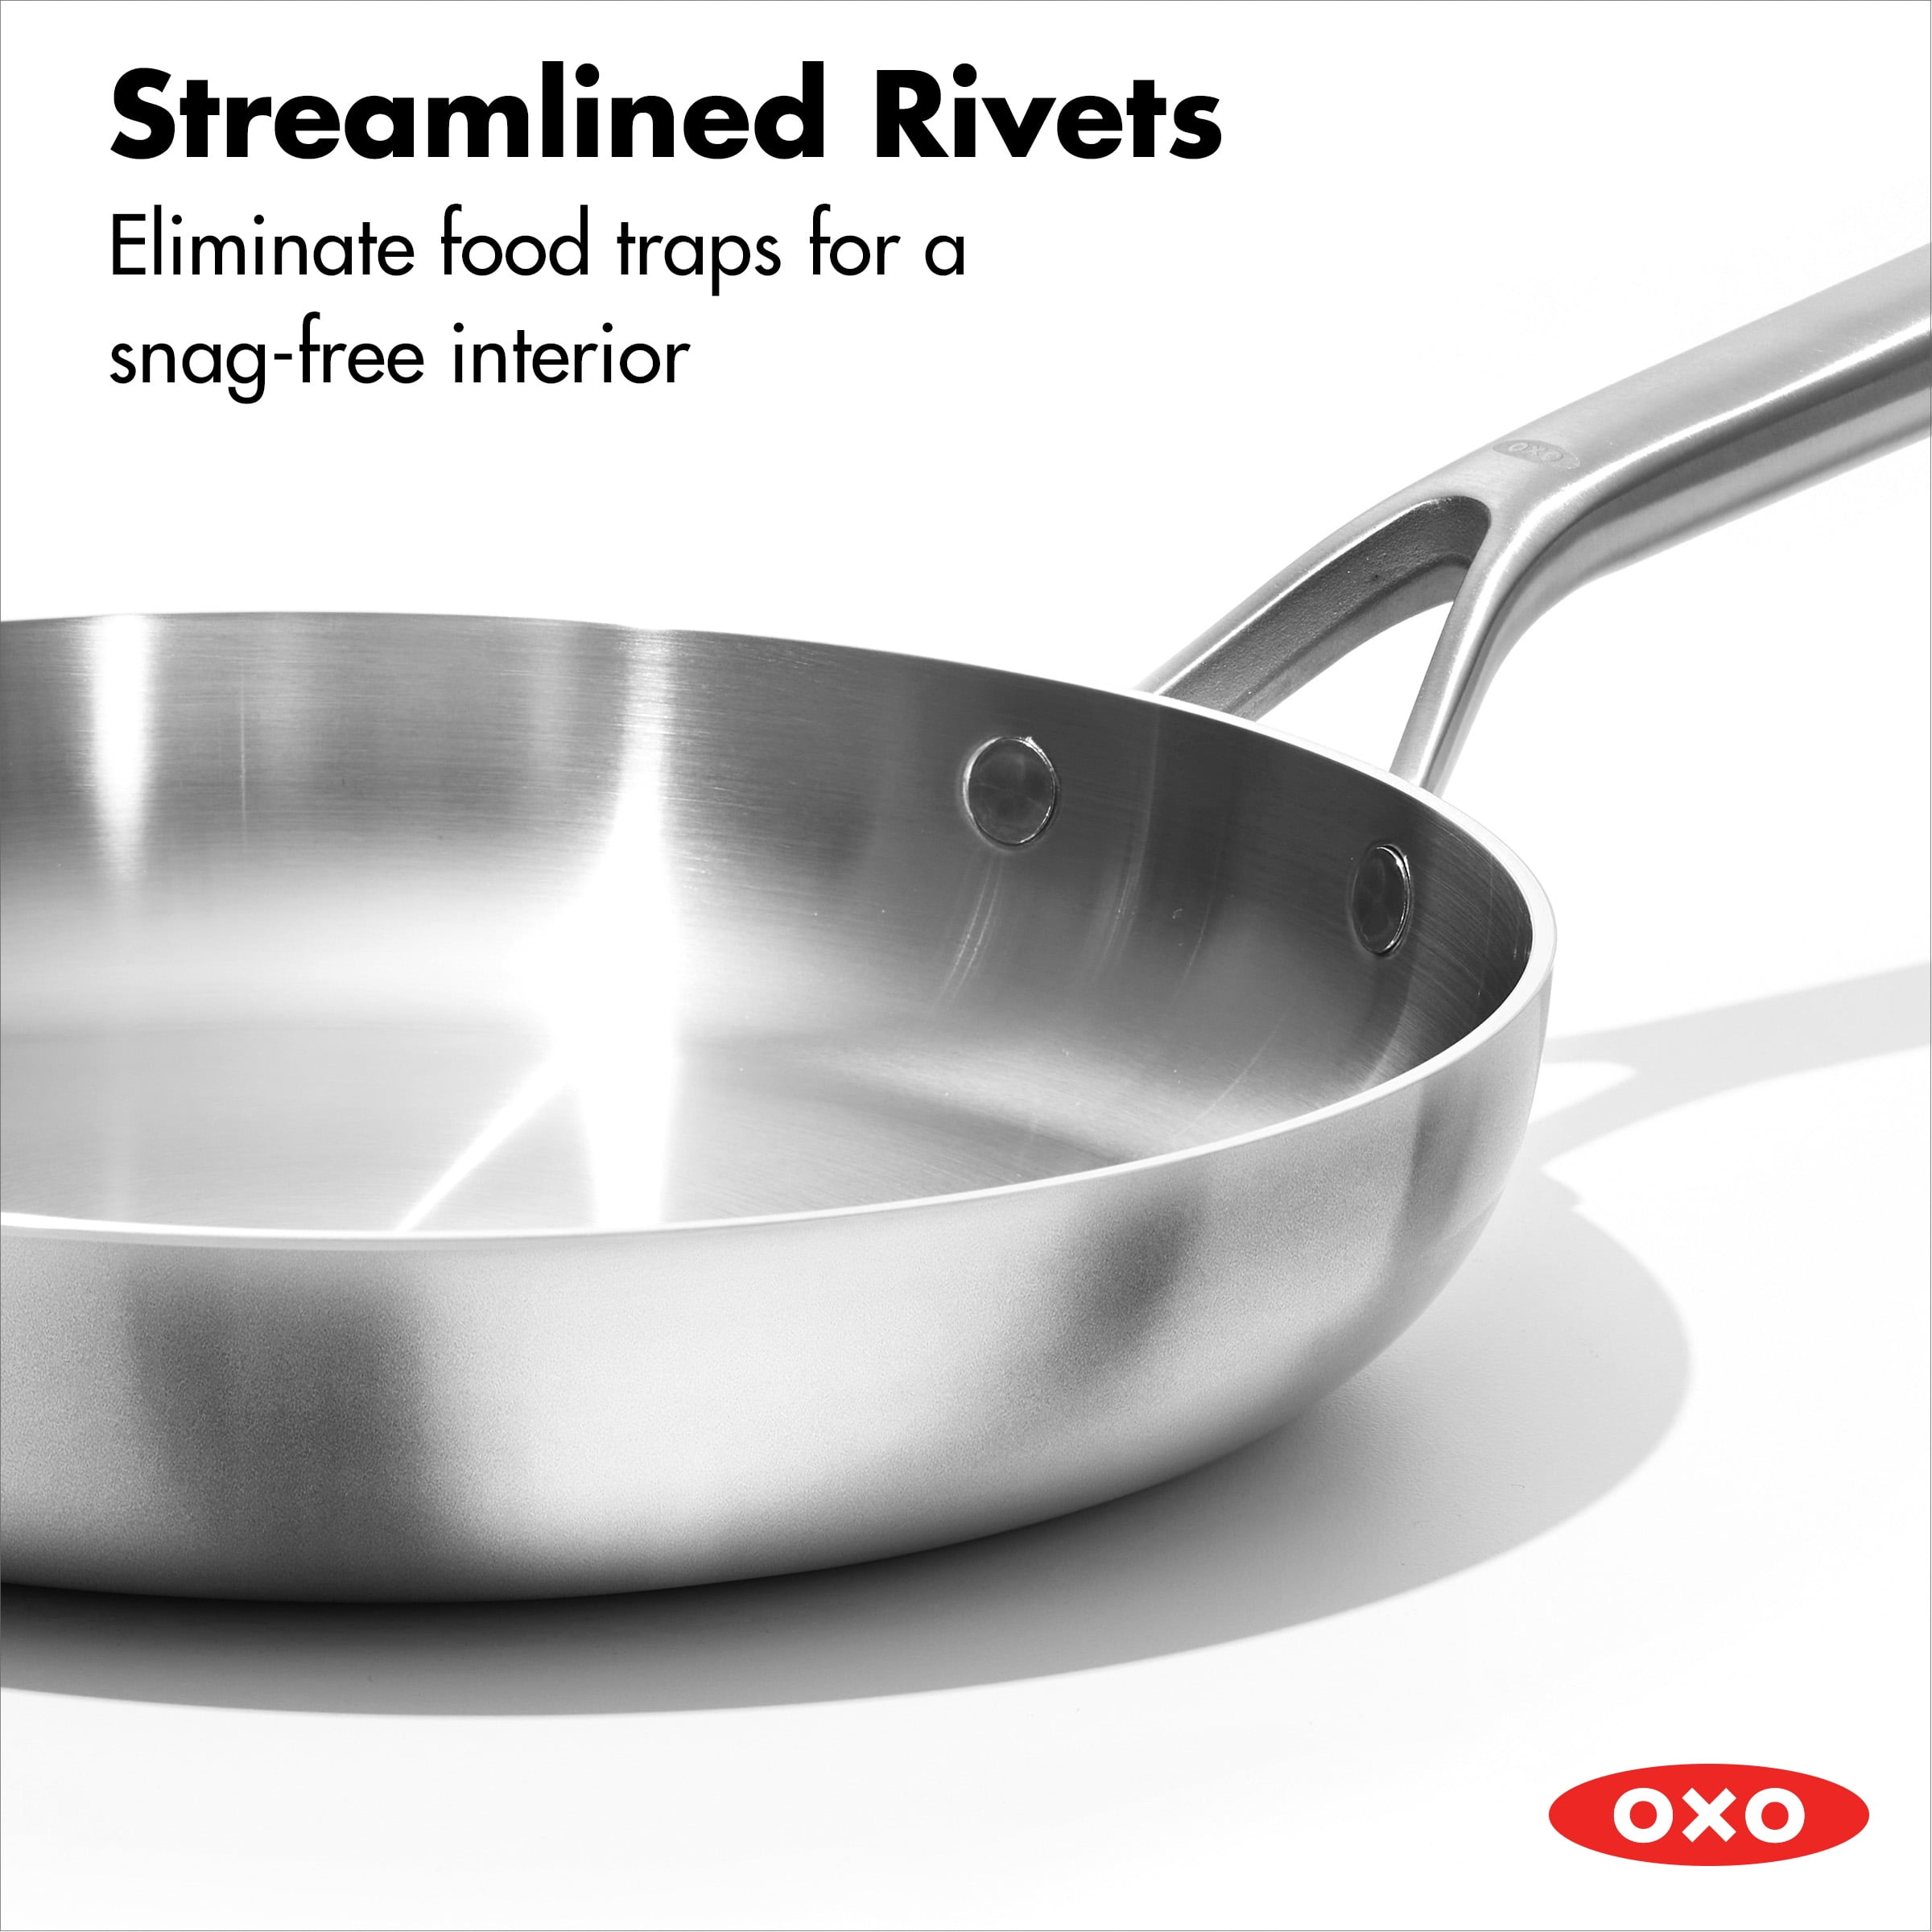 Oxo 2pc Mira Tri-ply Stainless Steel Non-stick Frypan Set Silver : Target